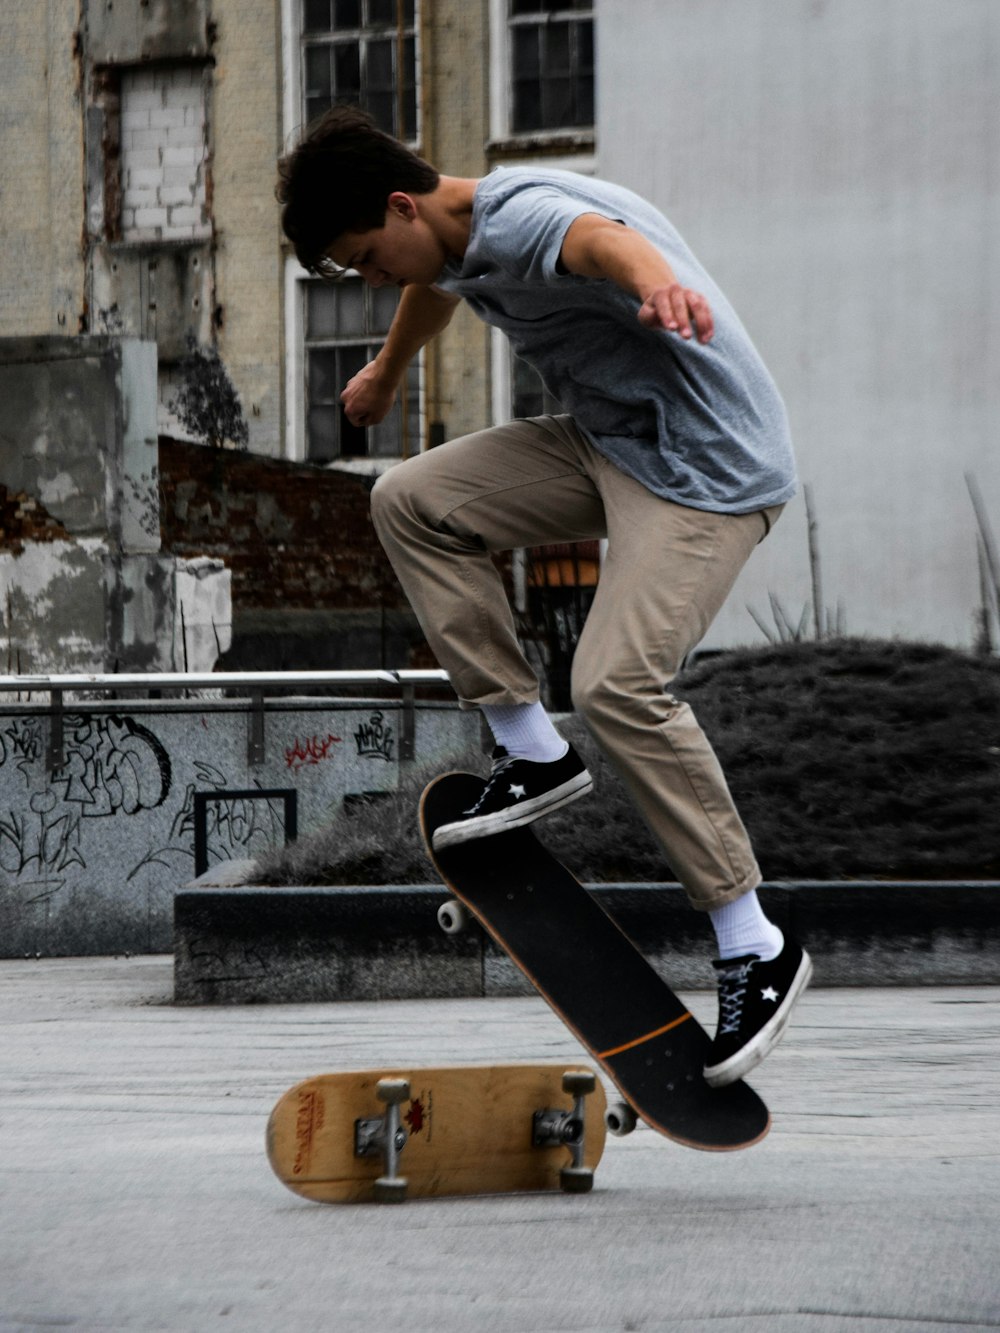 man in gray shirt and black pants riding skateboard during daytime